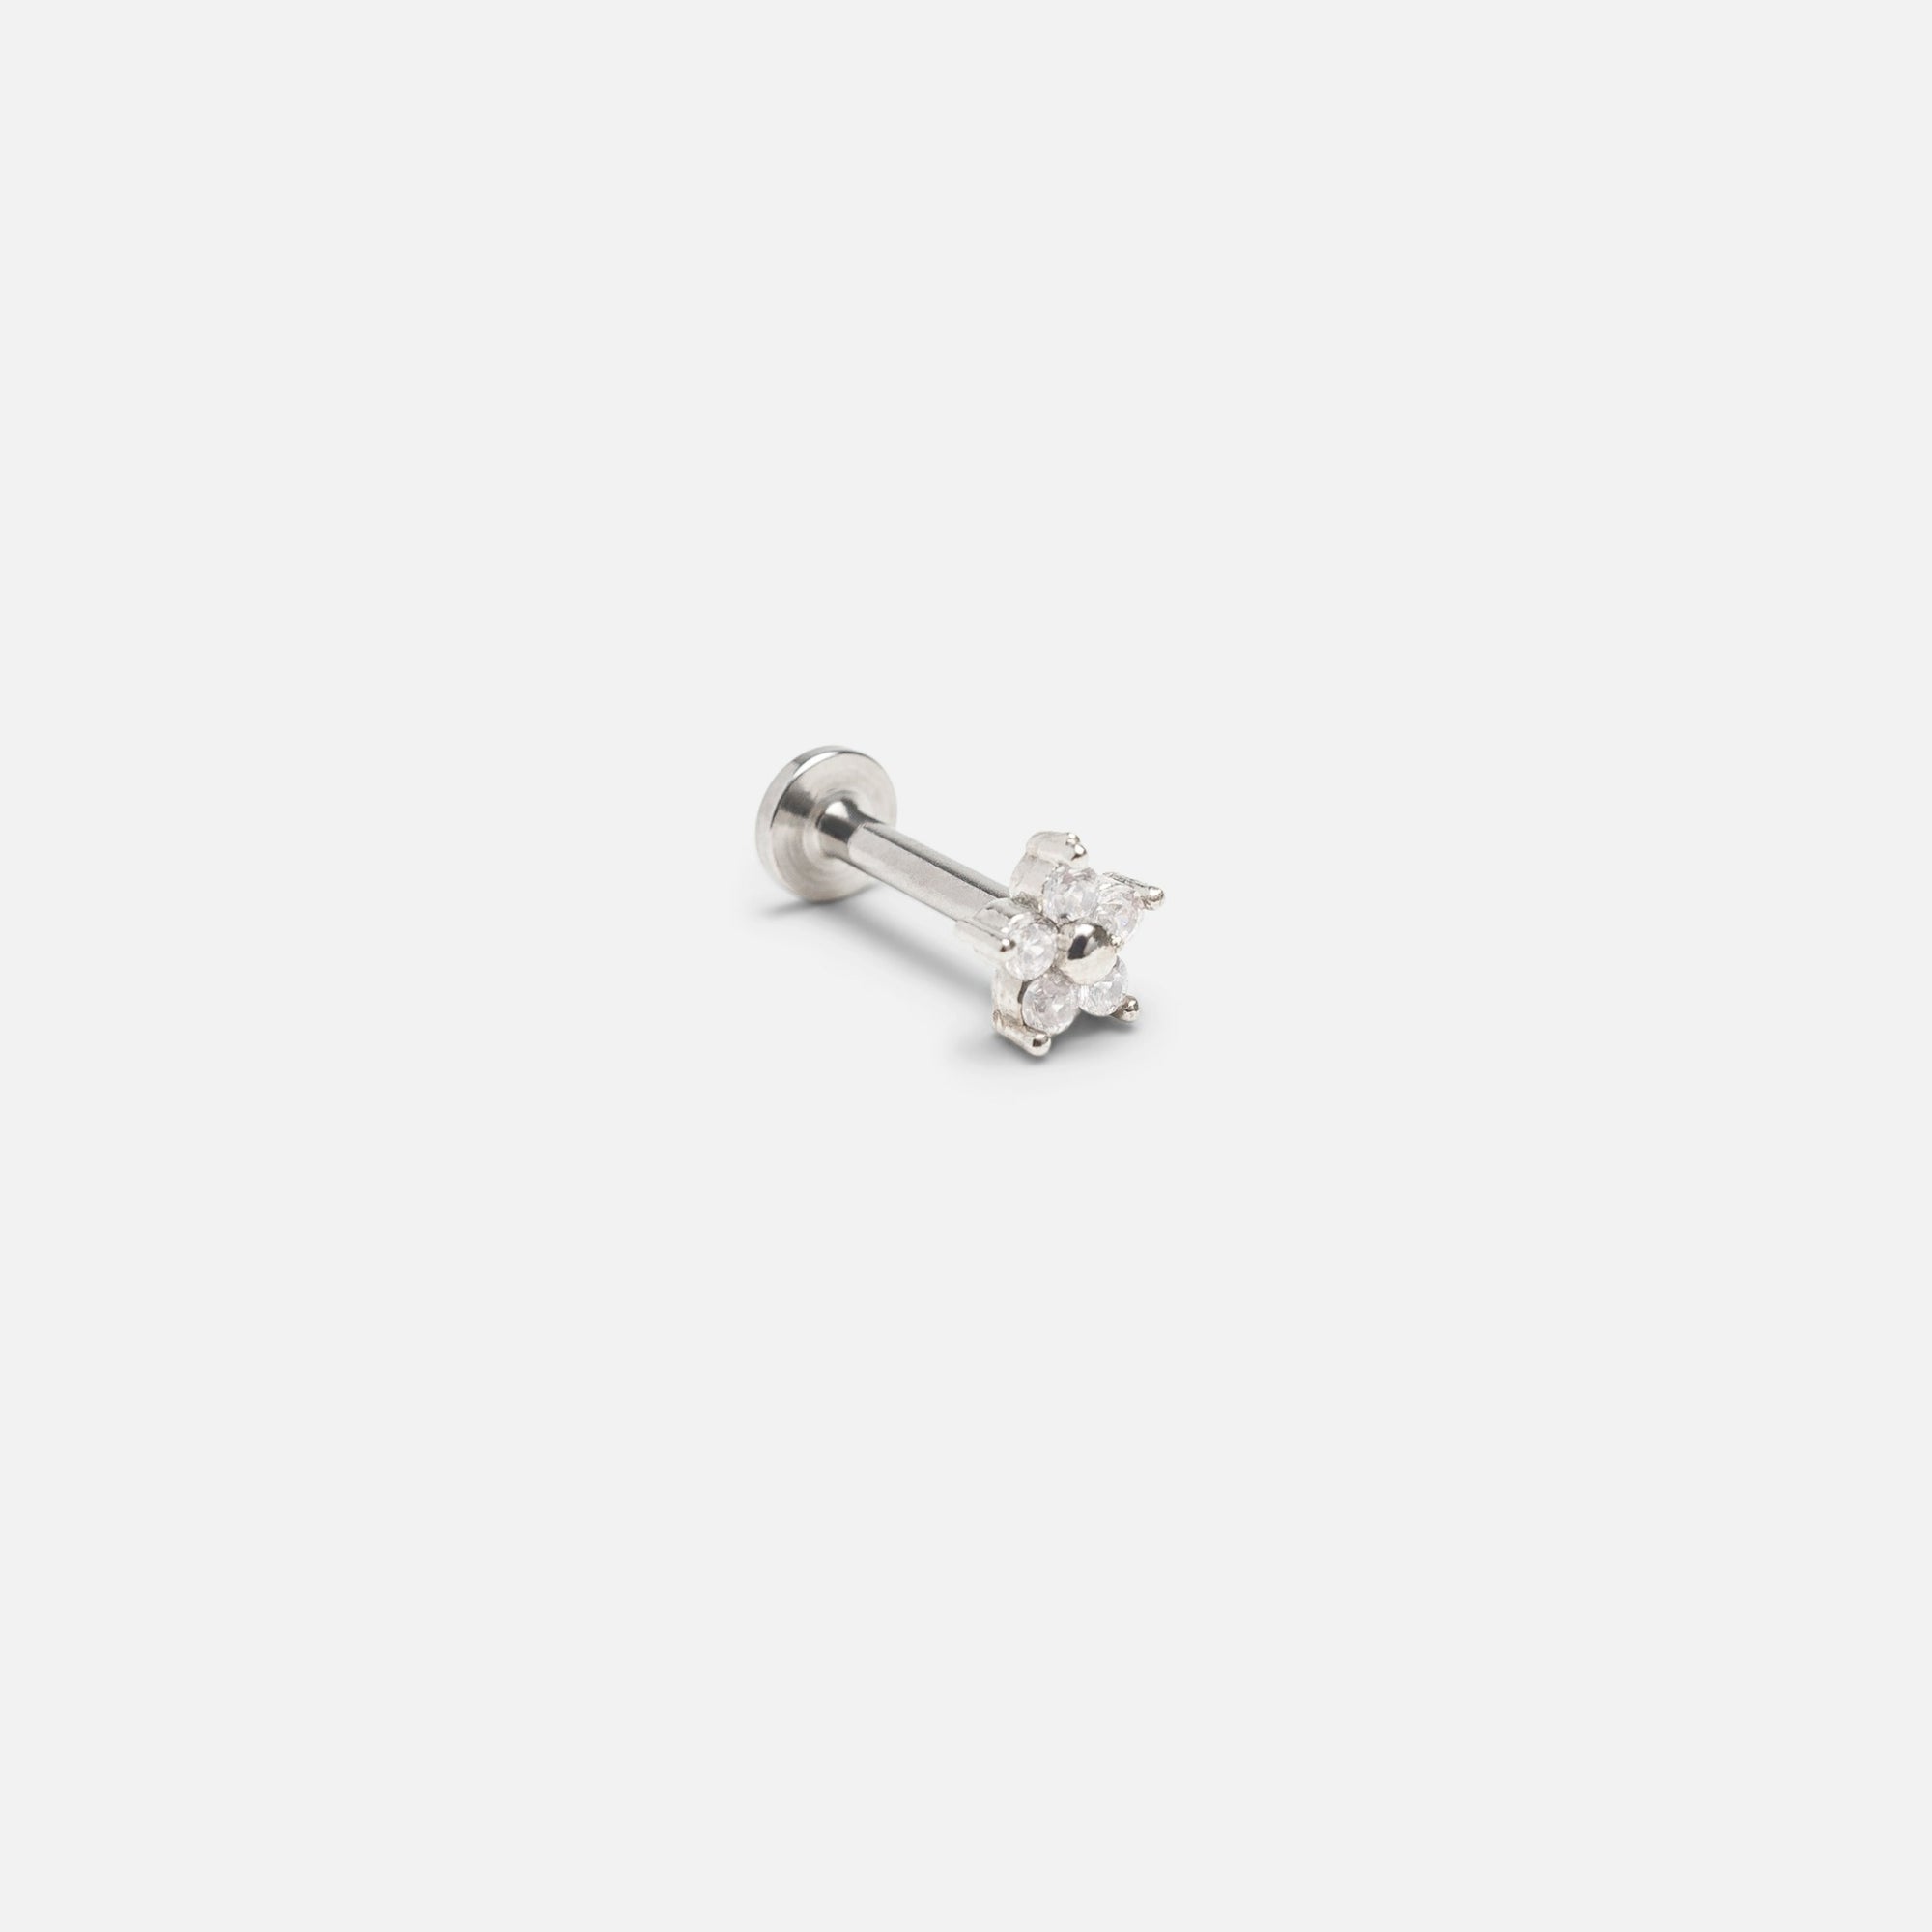 Silver flower cartilage piercing earrings in stainless steel 